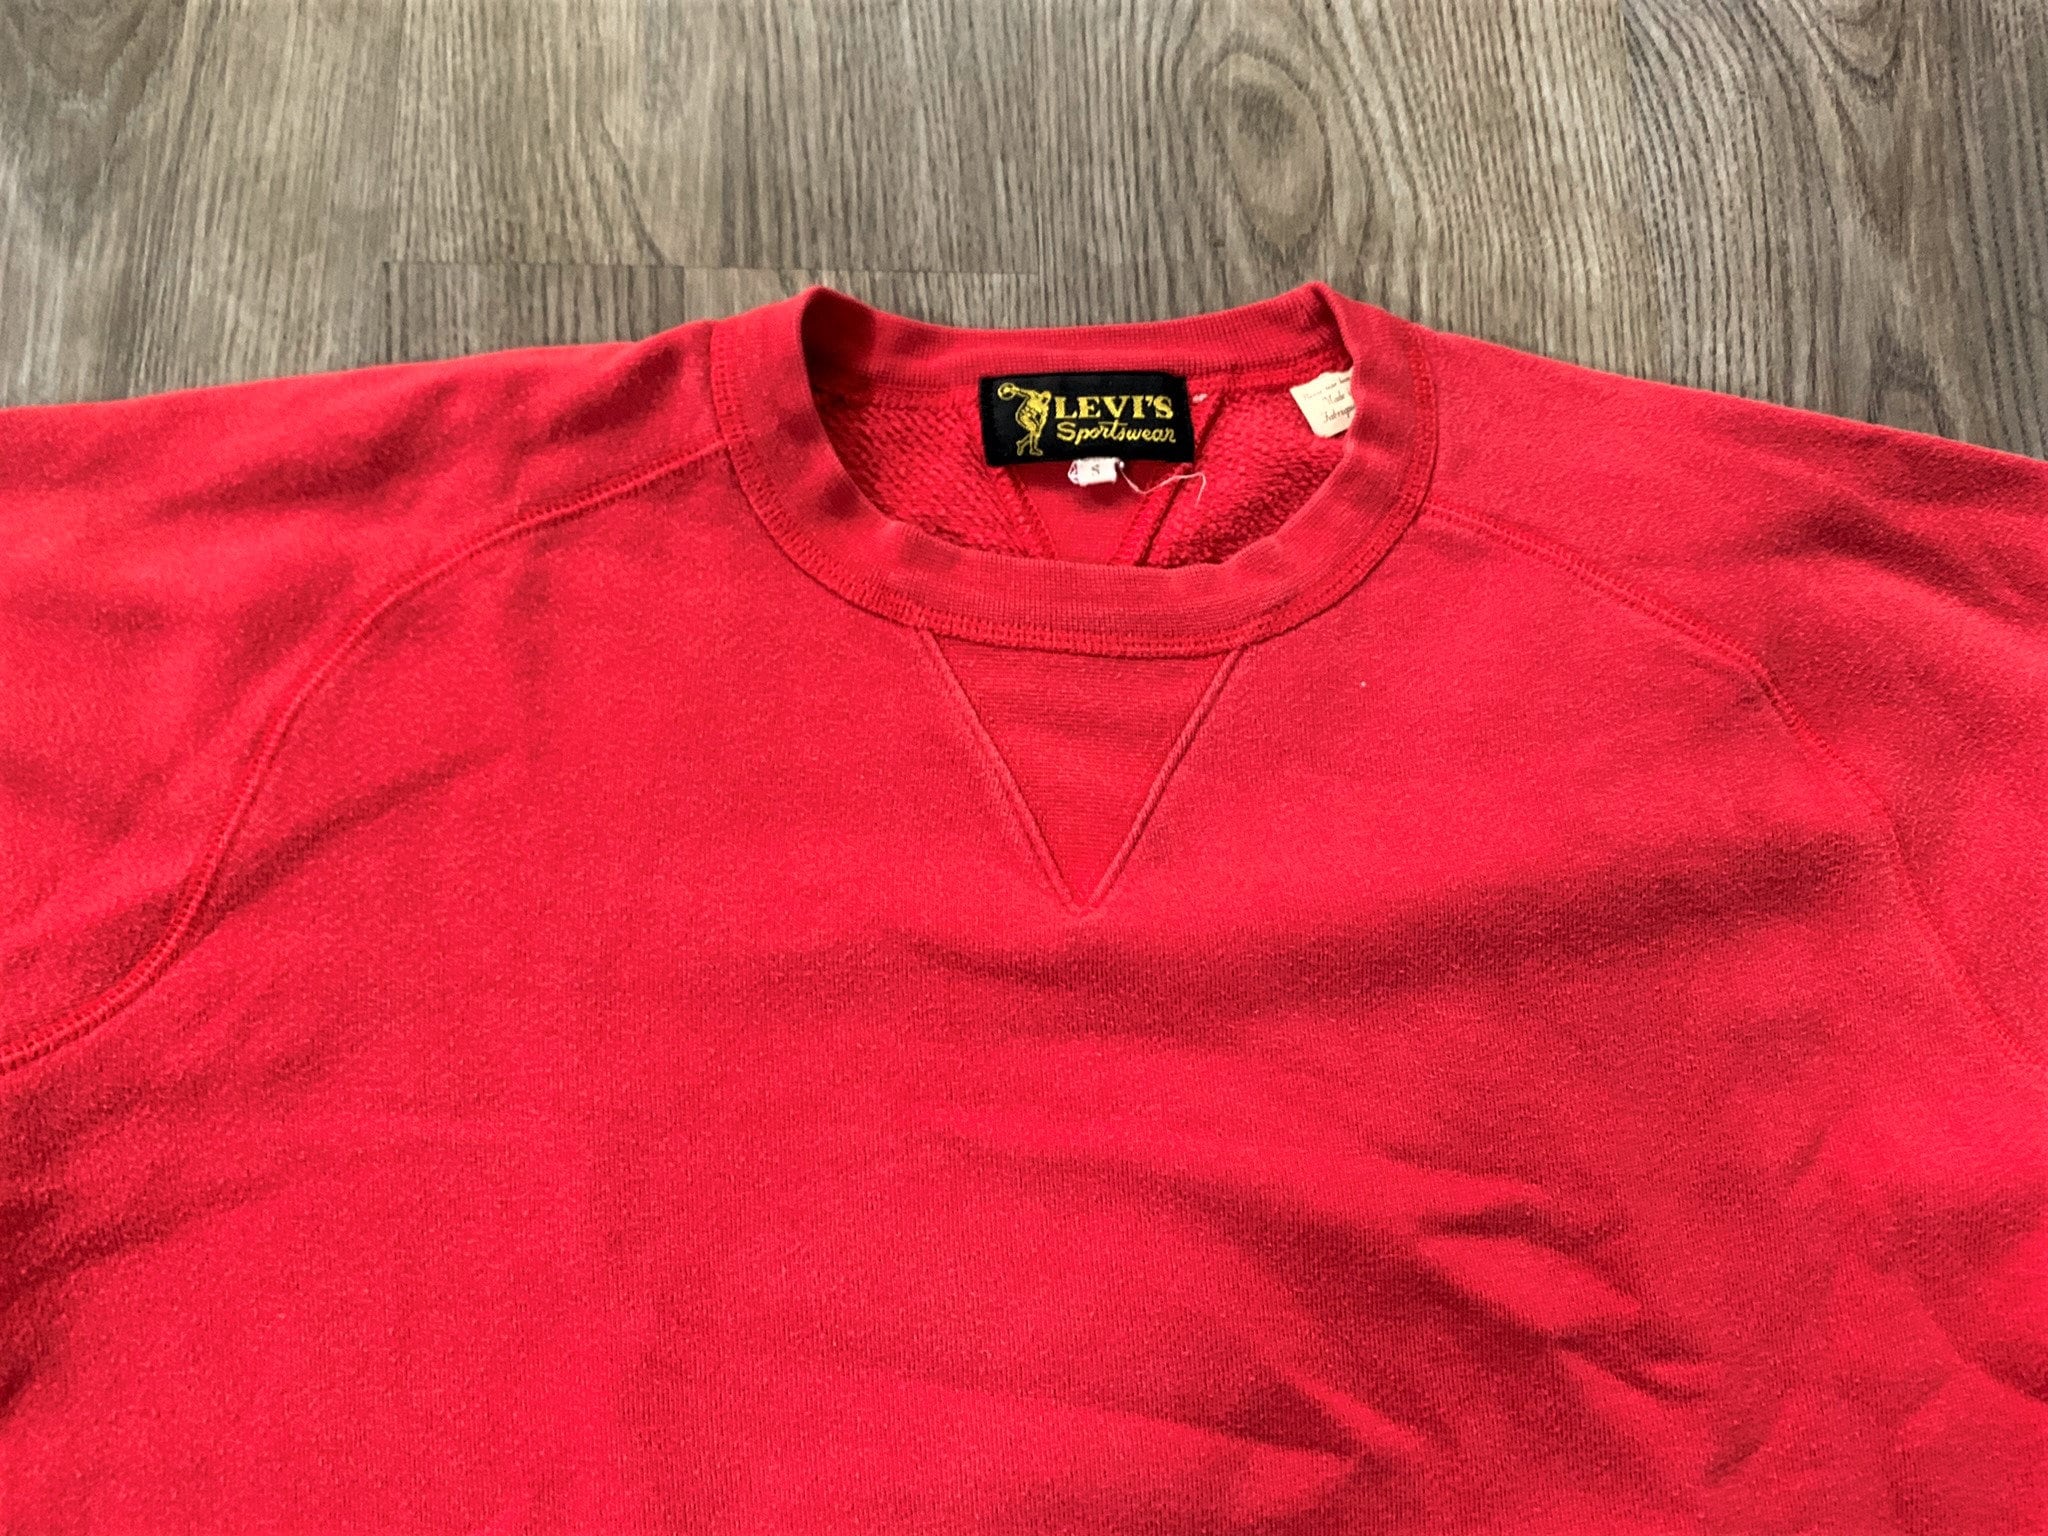 Levis Vintage Clothing Red Crewneck Sweatshirt Small - Etsy